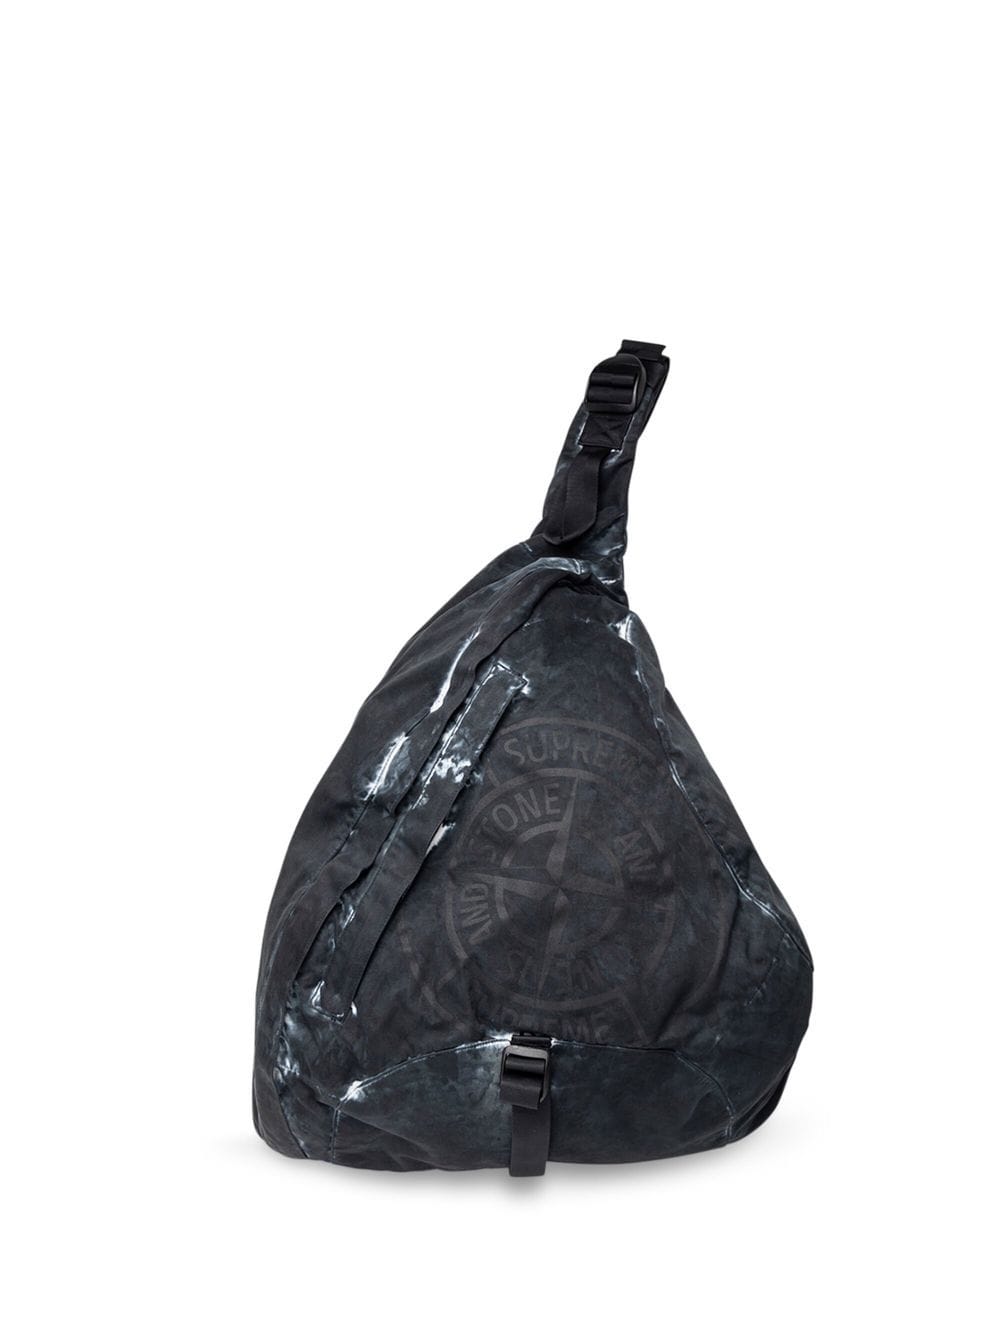 Supreme x Stone Island Printed Camo Shoulder Bag - Farfetch